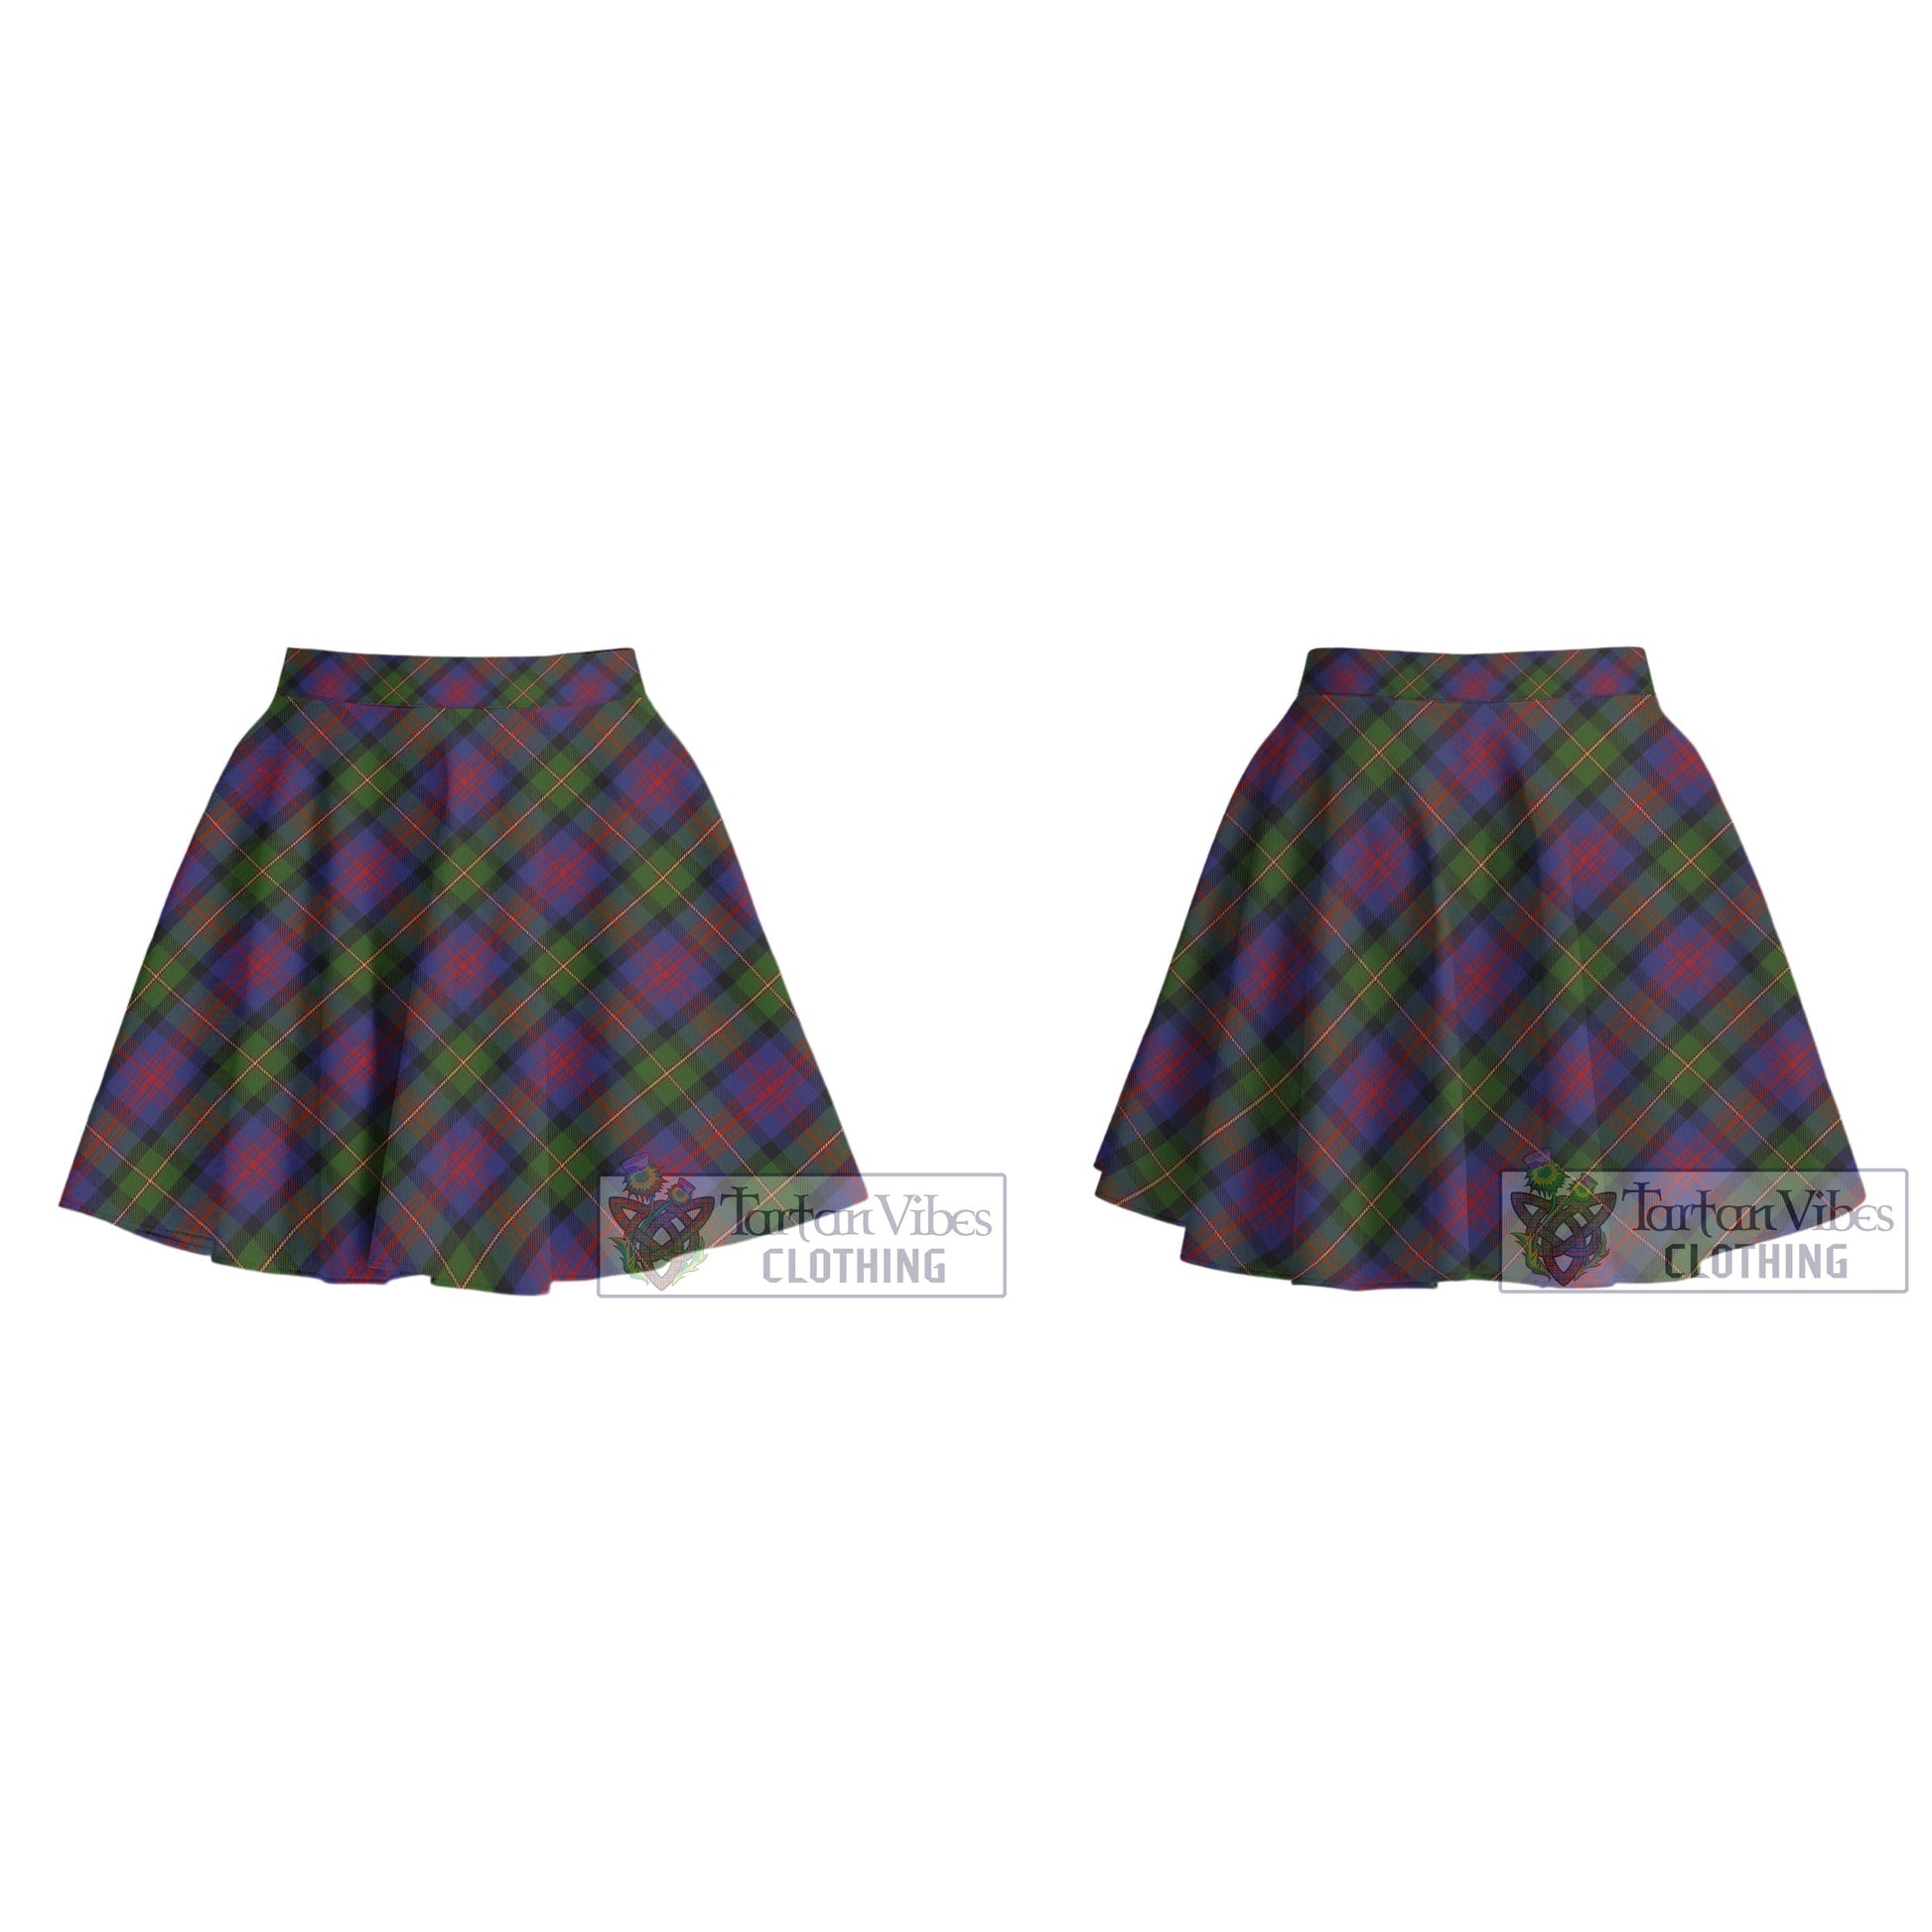 Tartan Vibes Clothing MacLennan Tartan Women's Plated Mini Skirt